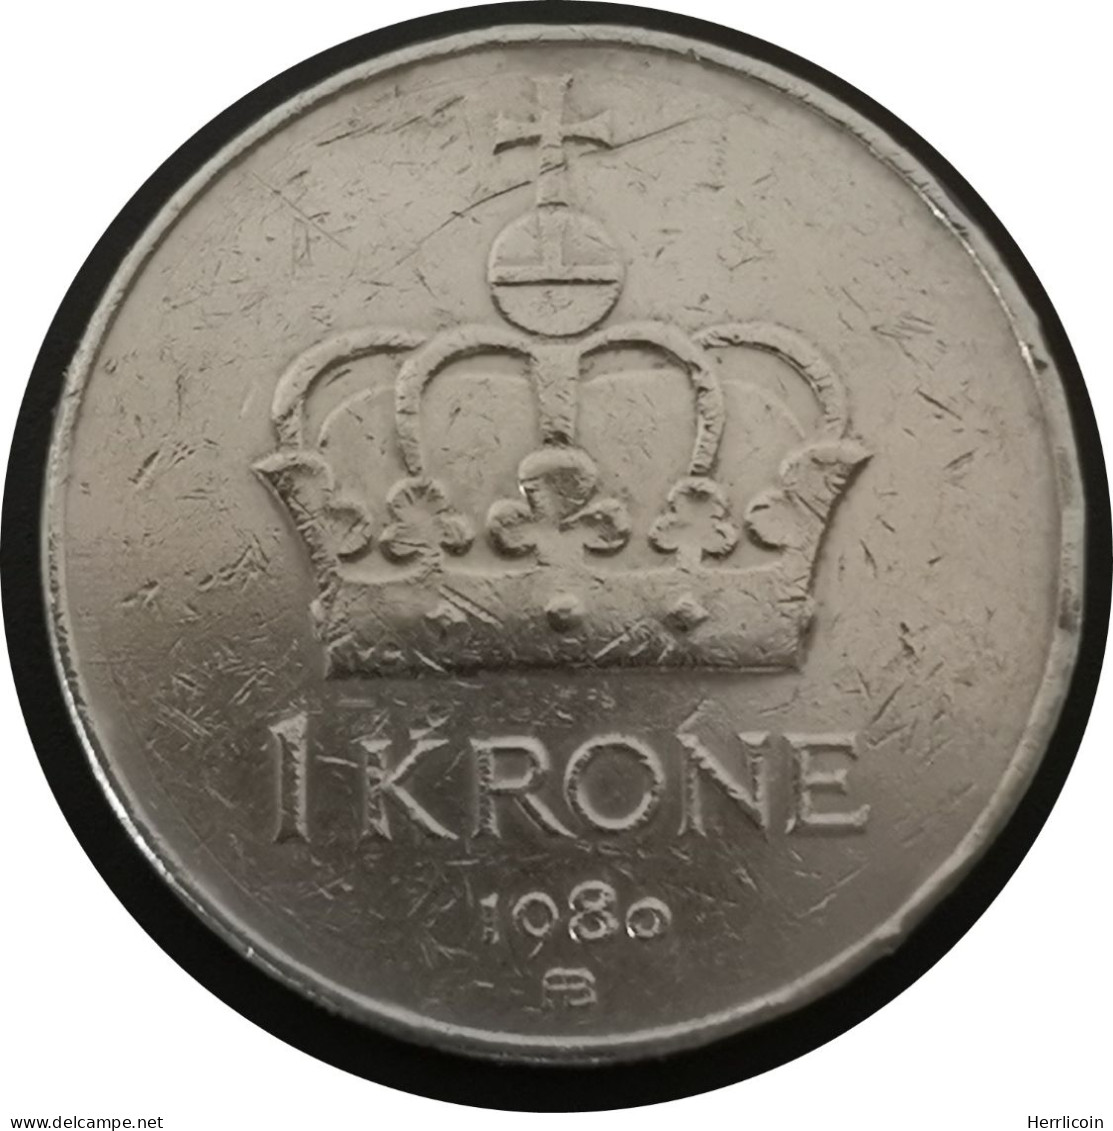 Monnaie Norvège - 1980 - 1 Krone - Olav V - Norvegia